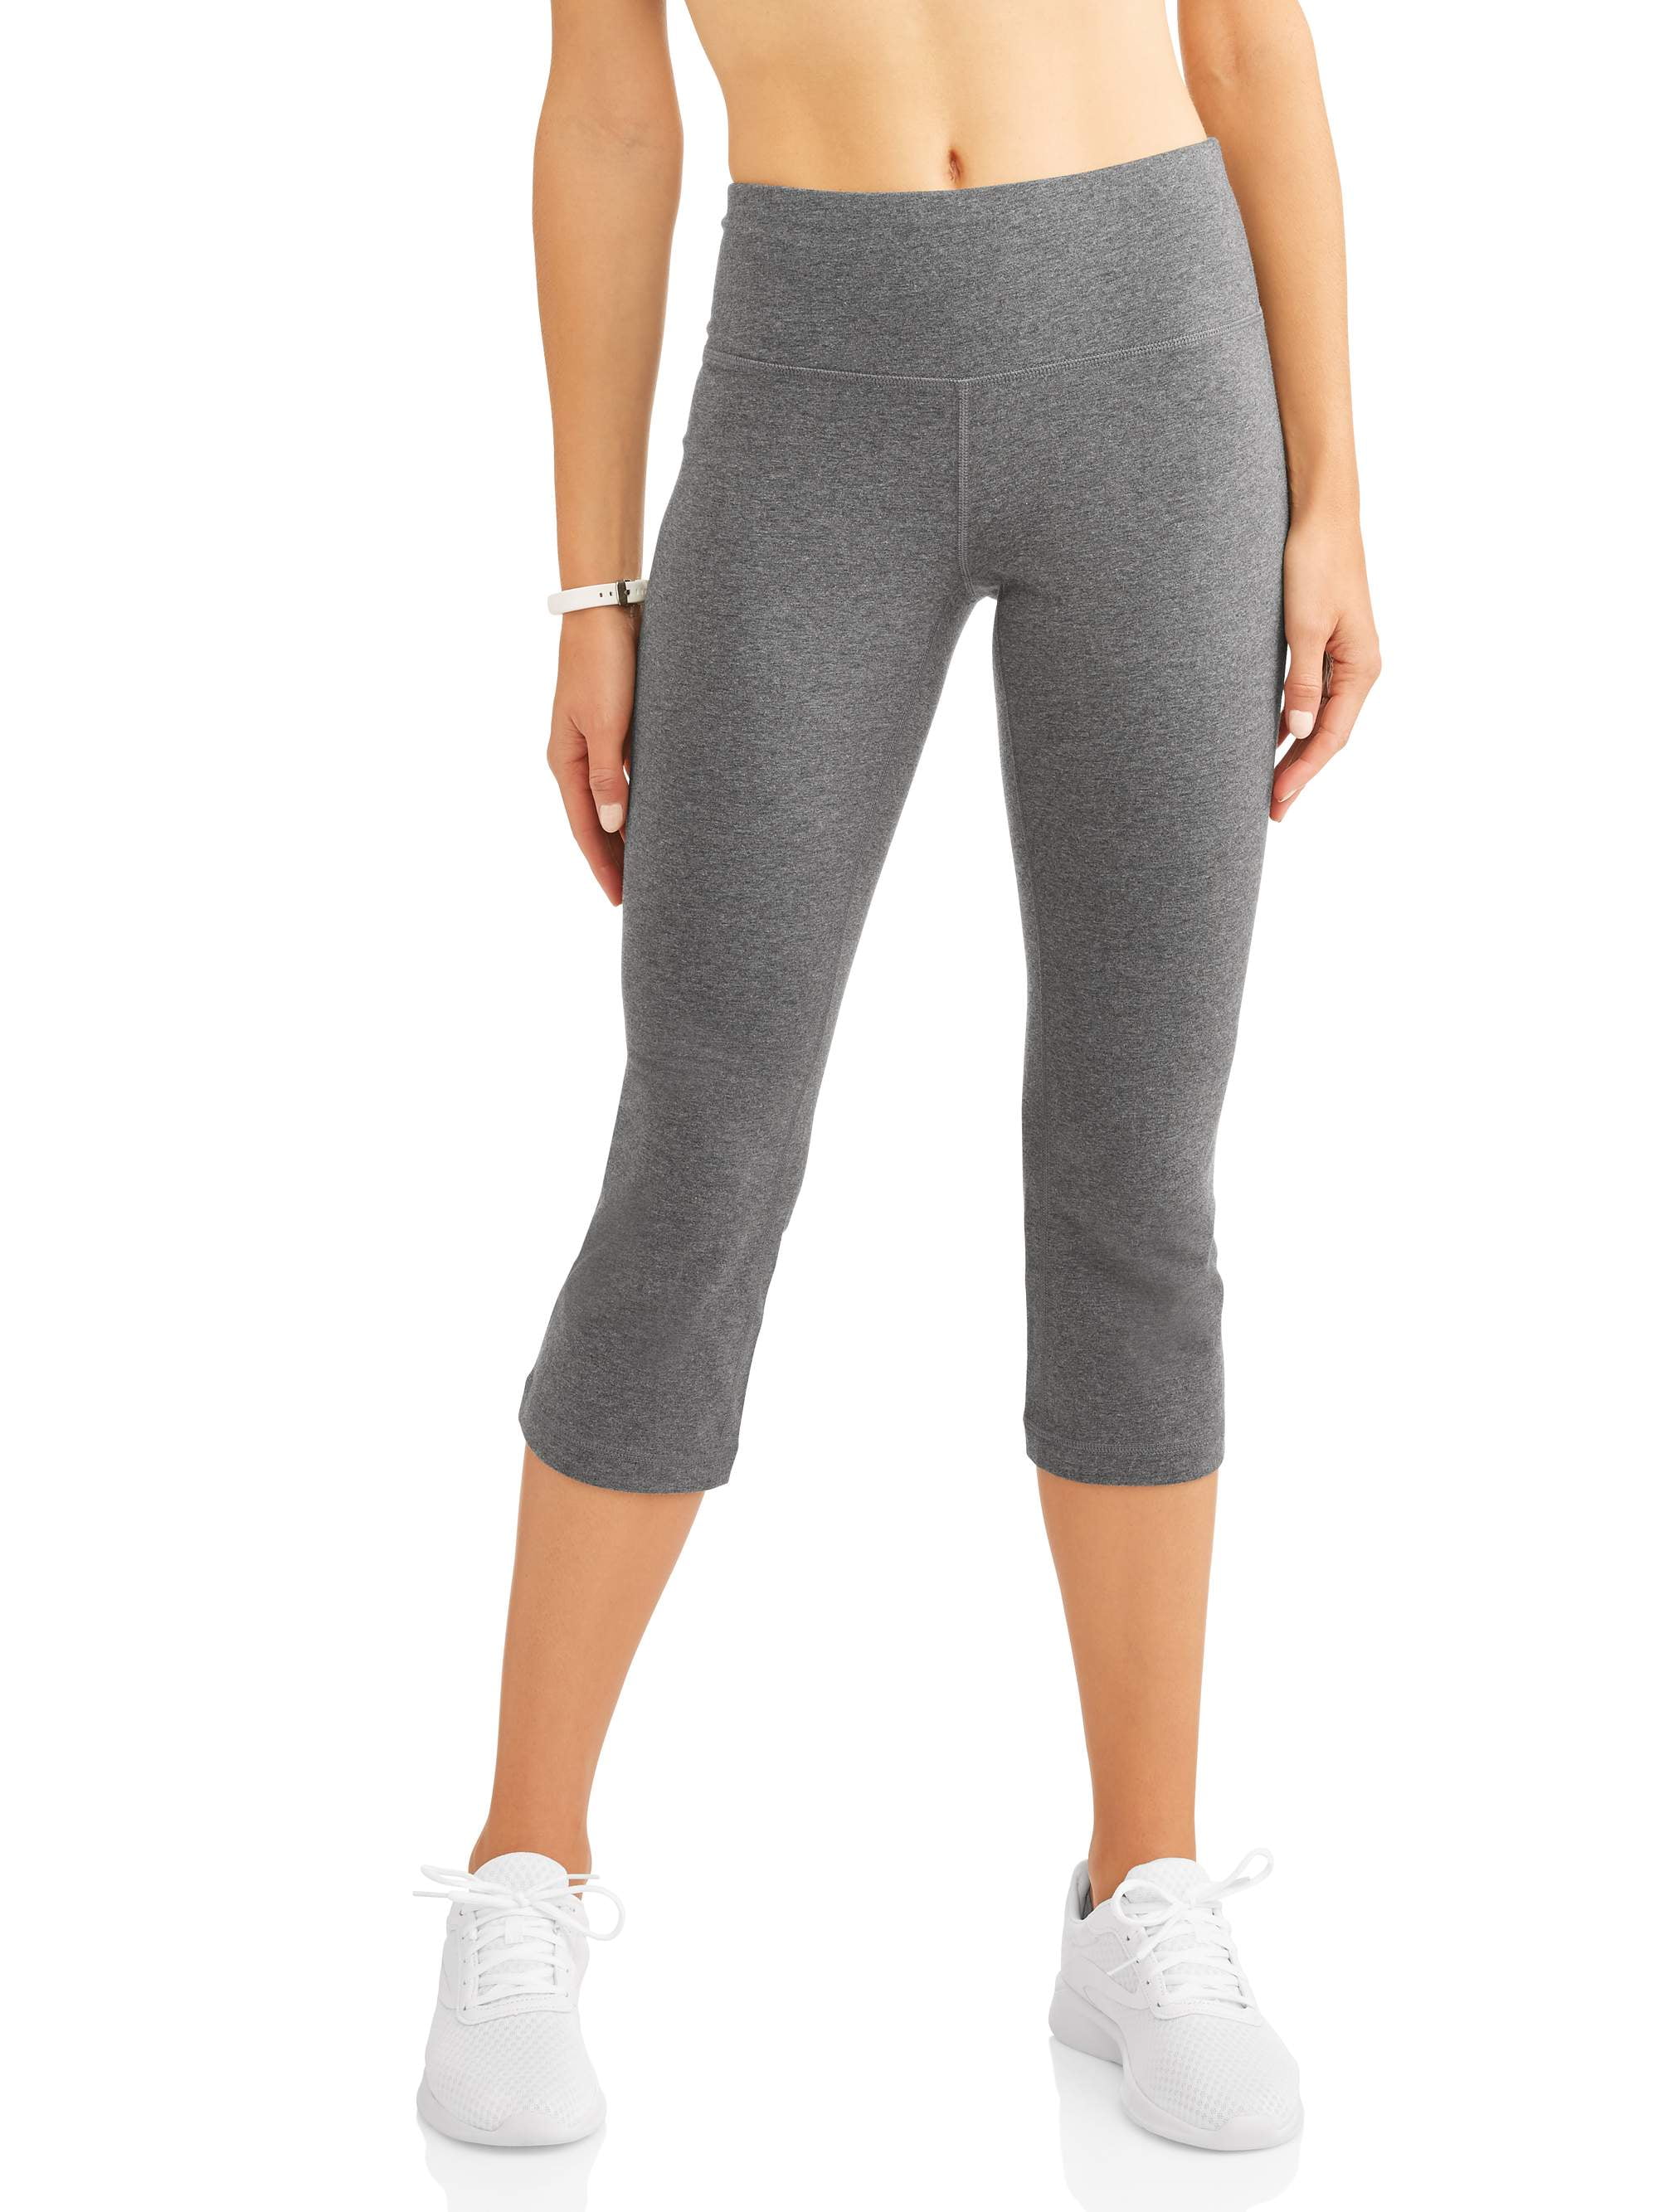 M XXL RV $79 Maroon L Women's Active Life Lattice Capri Yoga Pants Size S